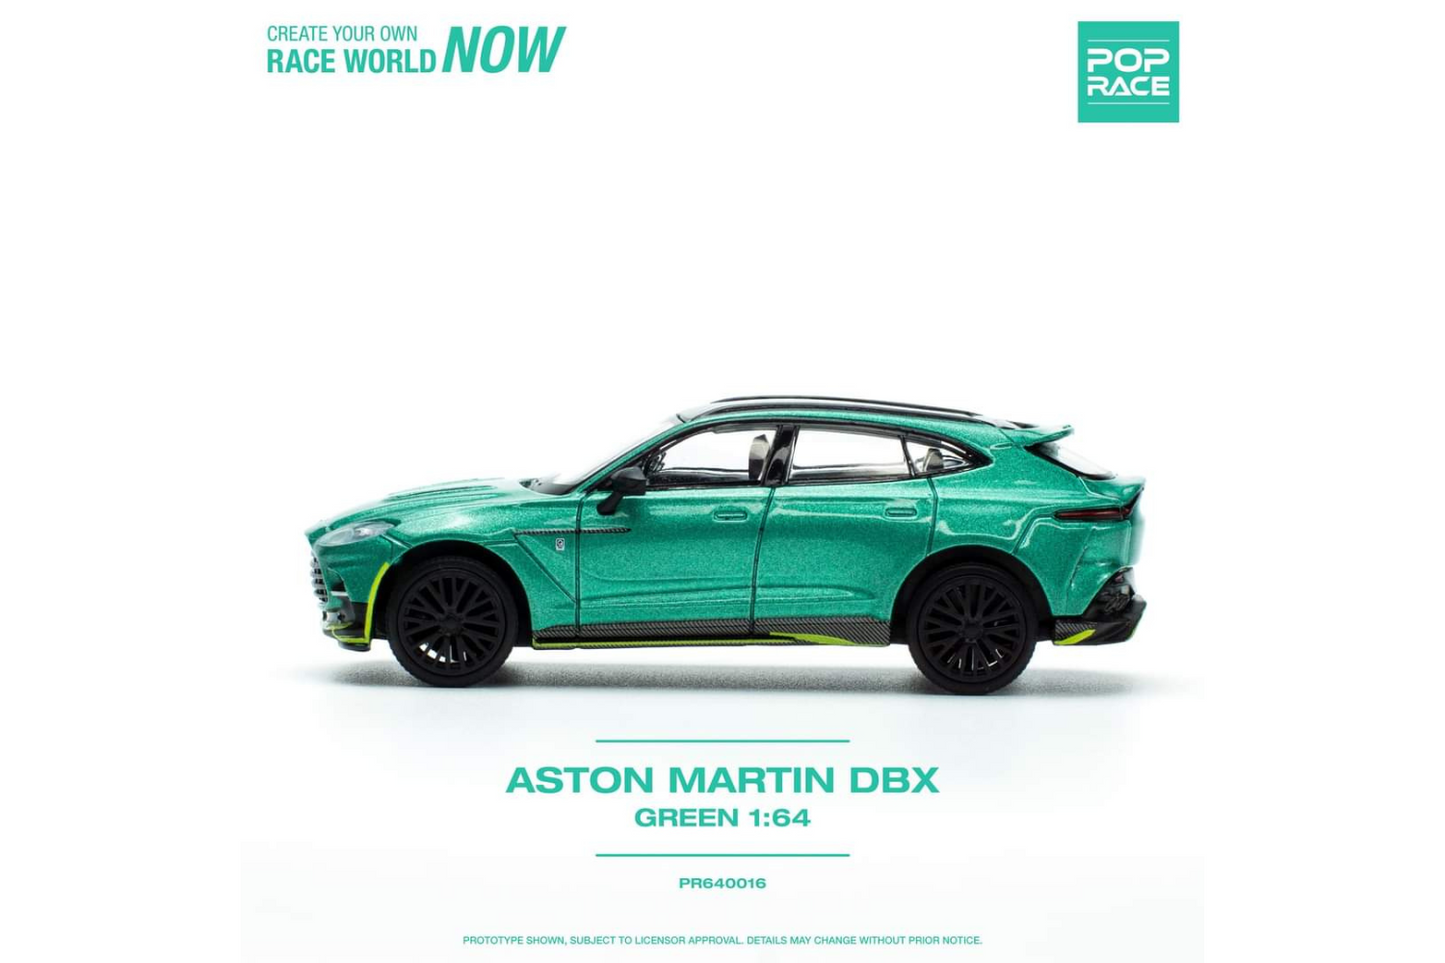 Pop Race 1/64 Aston Martin DBX in Racing Green